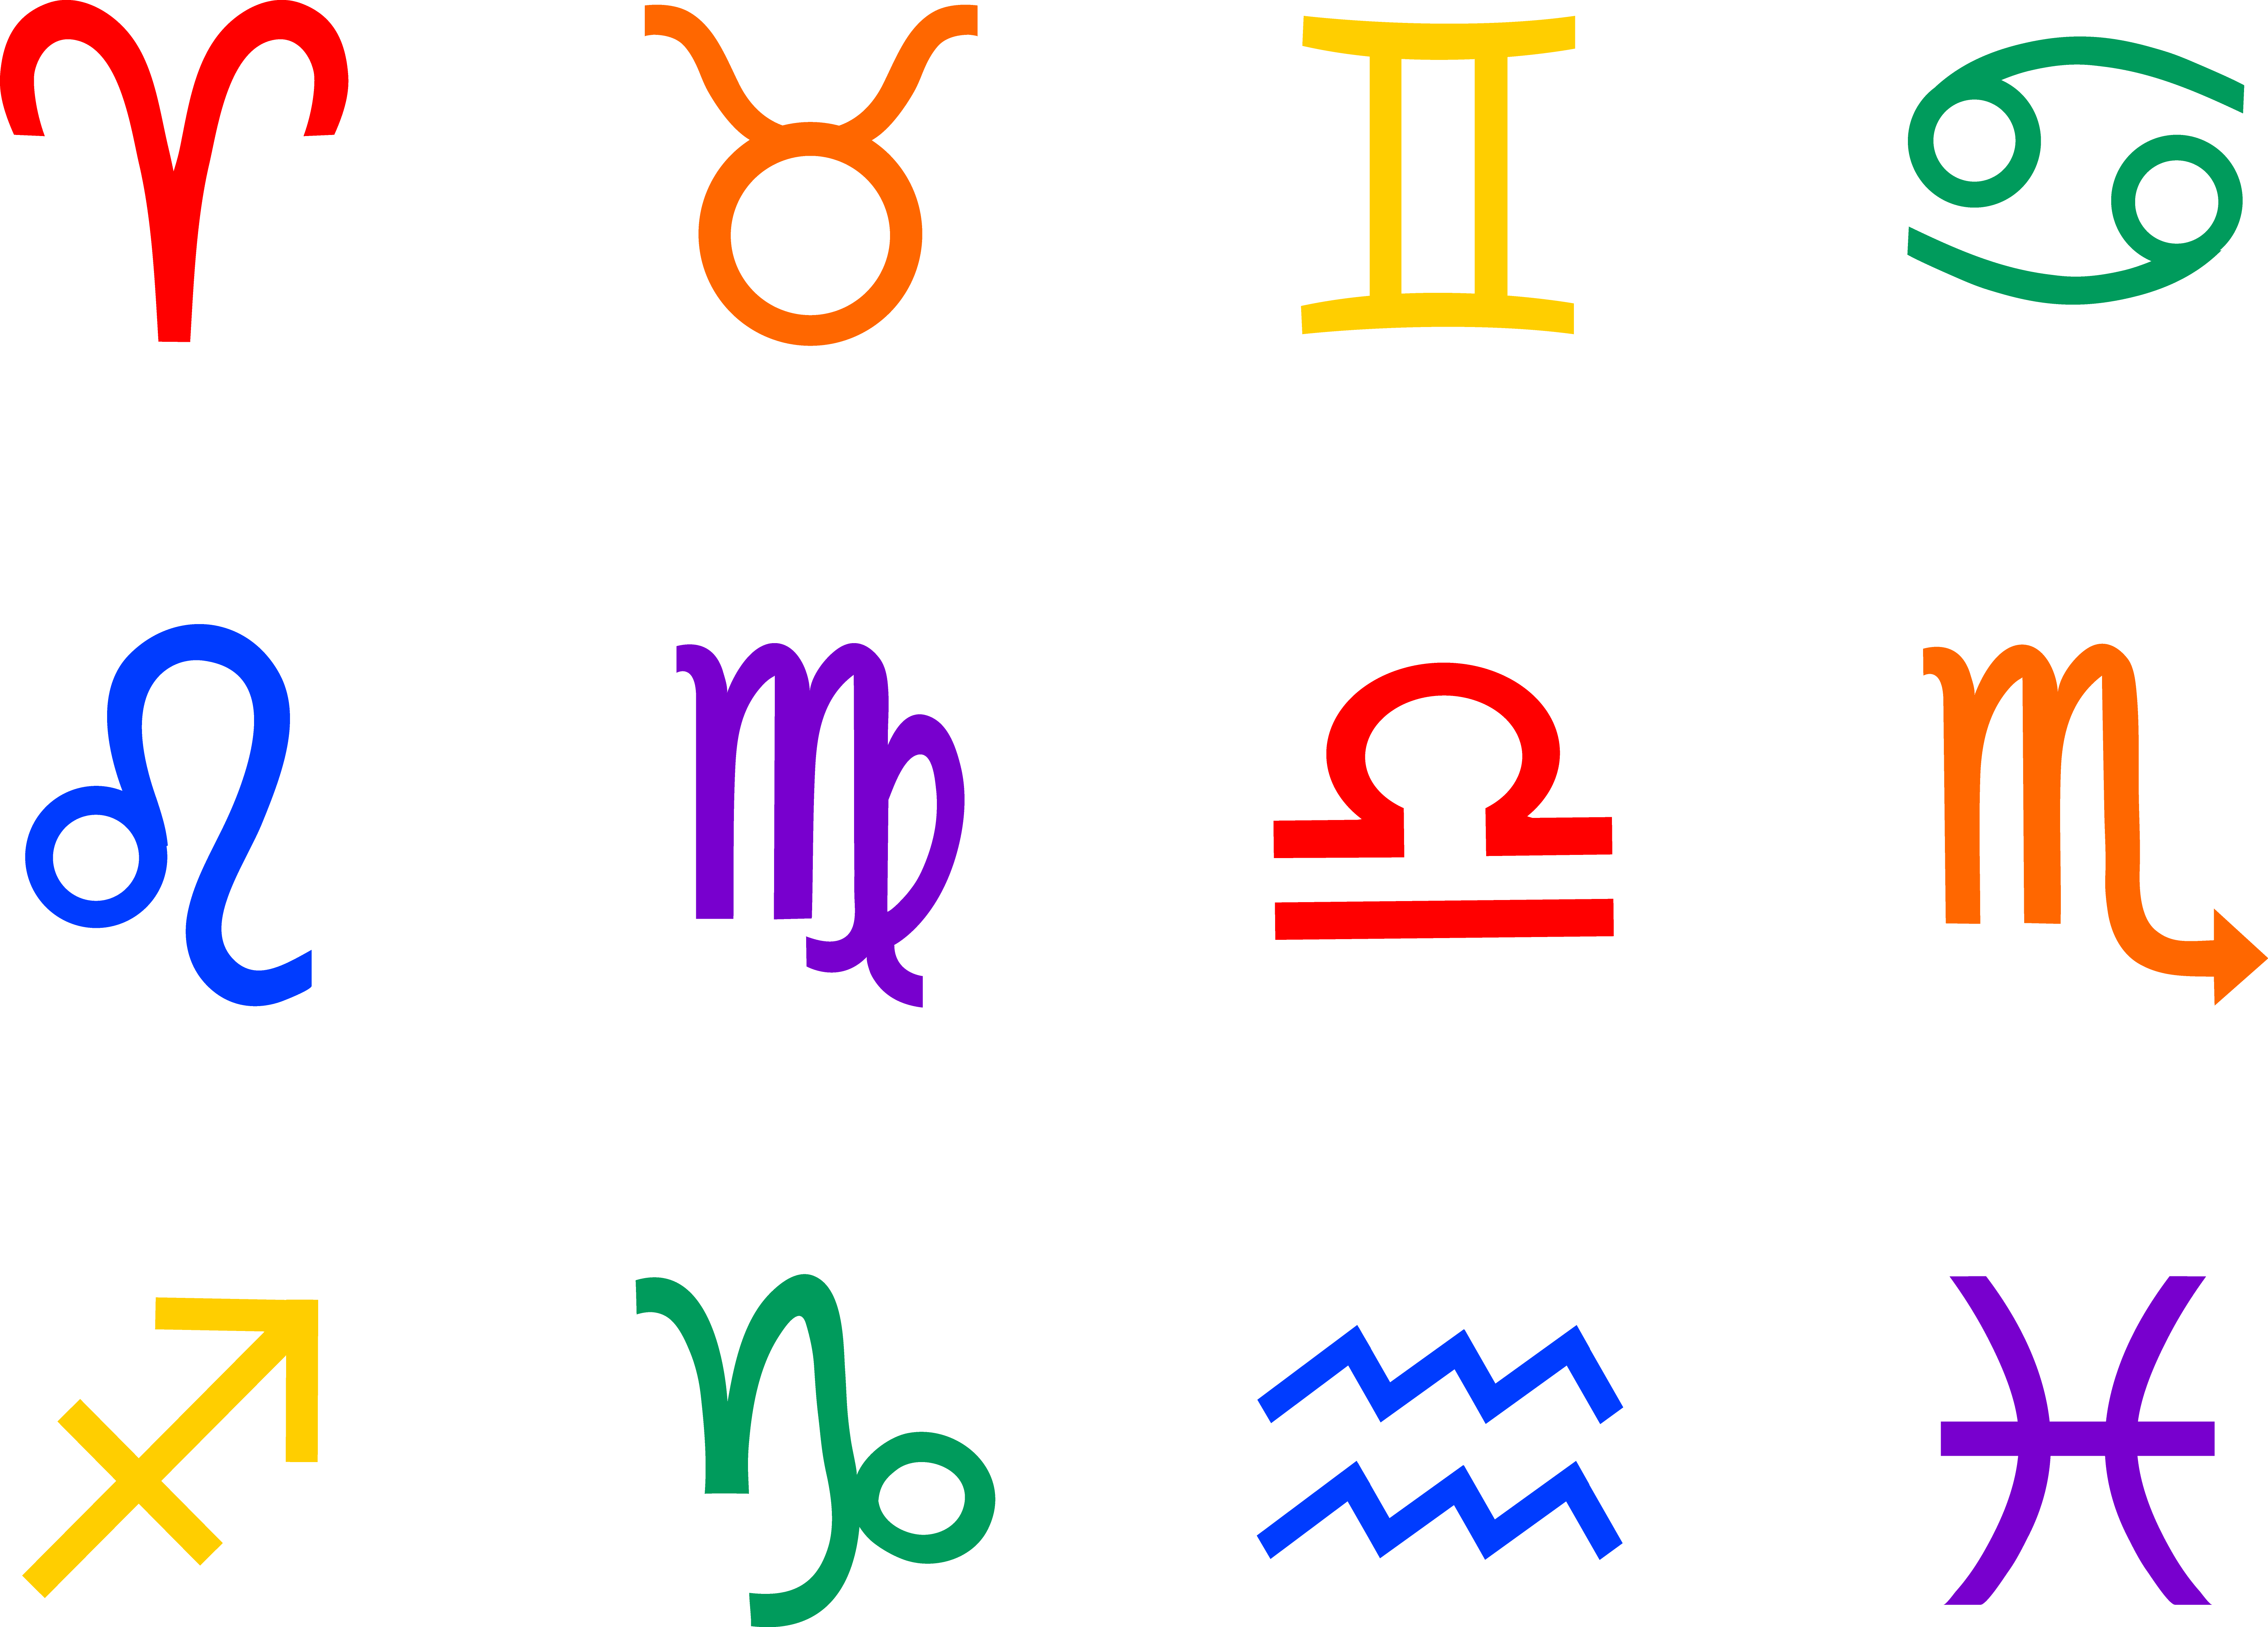 Знаки зодиака символы. Симлоаы знаков зодиака. Пиктограммы знаков зодиака. Значки обозначающие знаки зодиака.